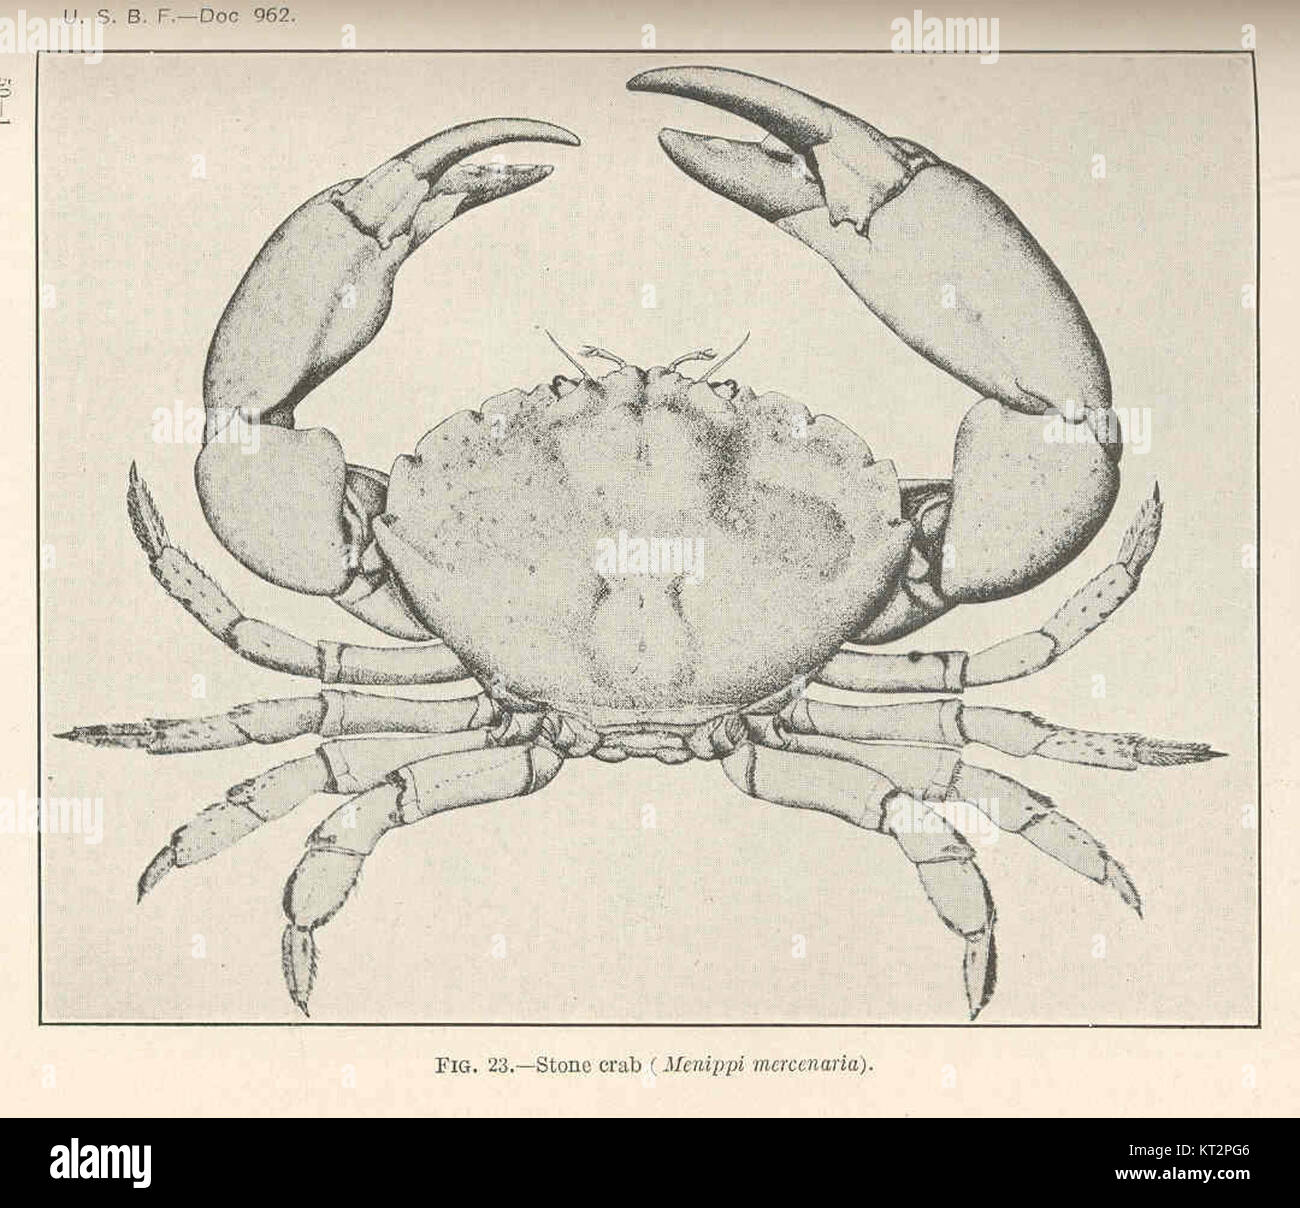 37677 Stone crab (Menippi mercenaria) Stock Photo